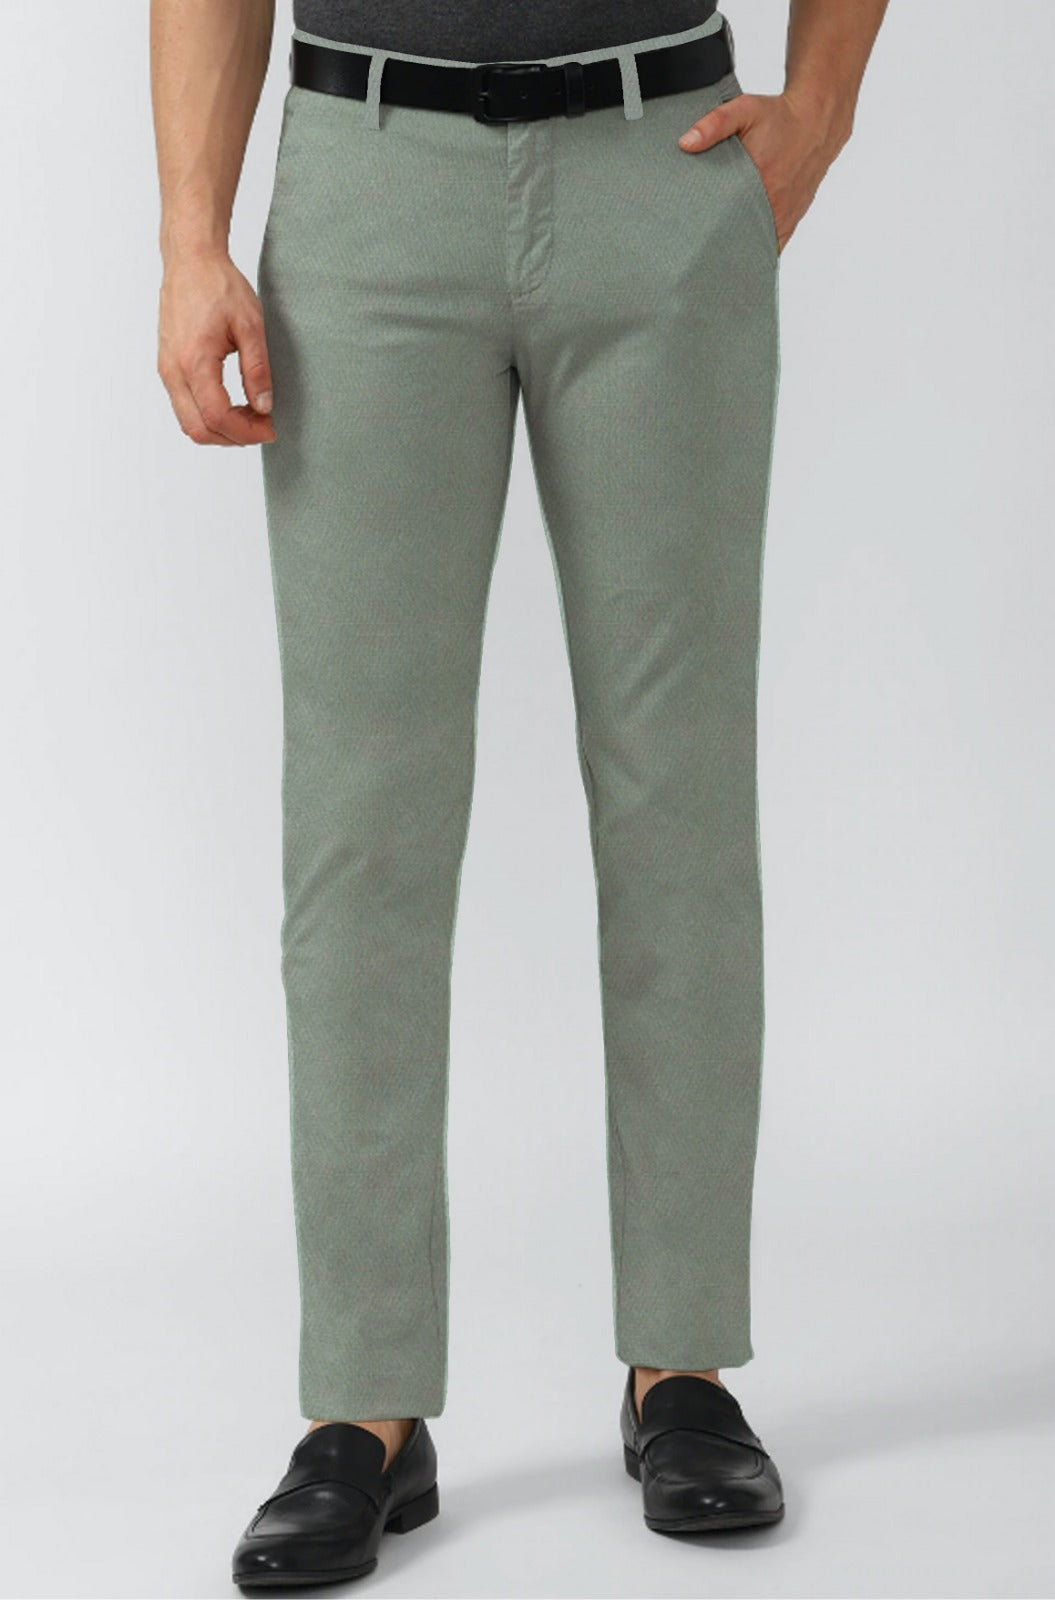 fcity.in - Formal Trouser Fabrics Cambo 3 / Ravishing Glamarous Men Trousers